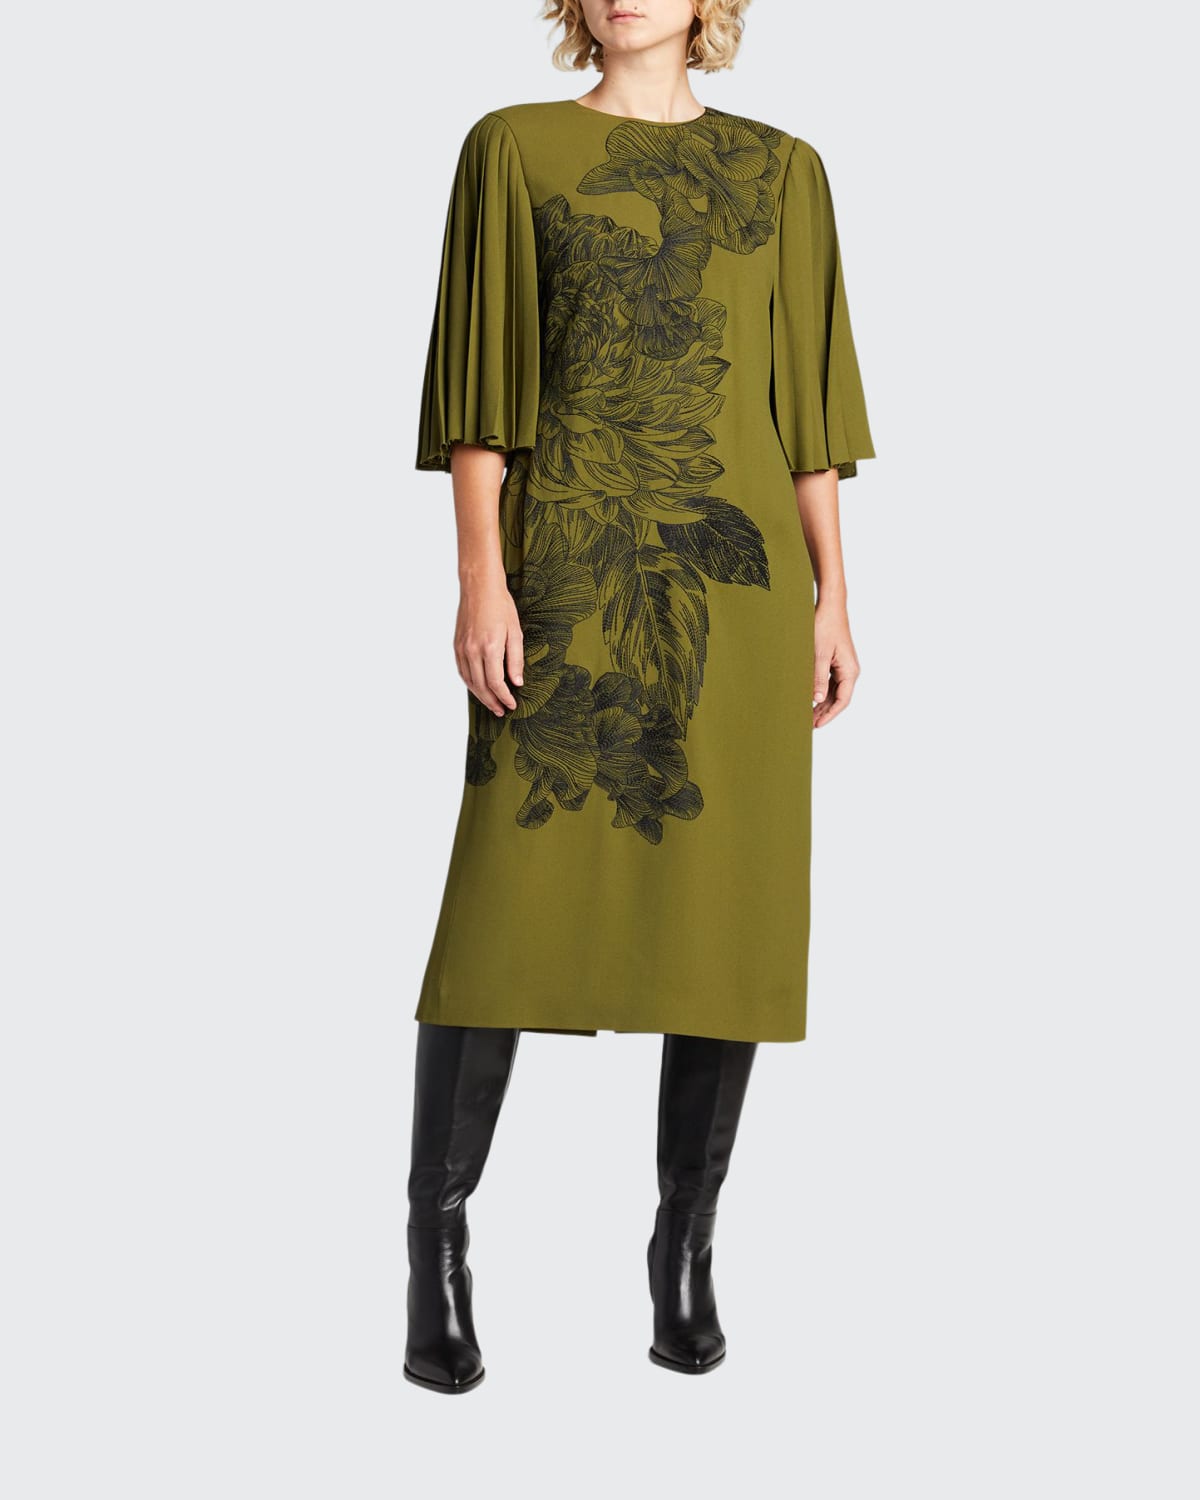 Round Neckline Embroidered Dress | bergdorfgoodman.com